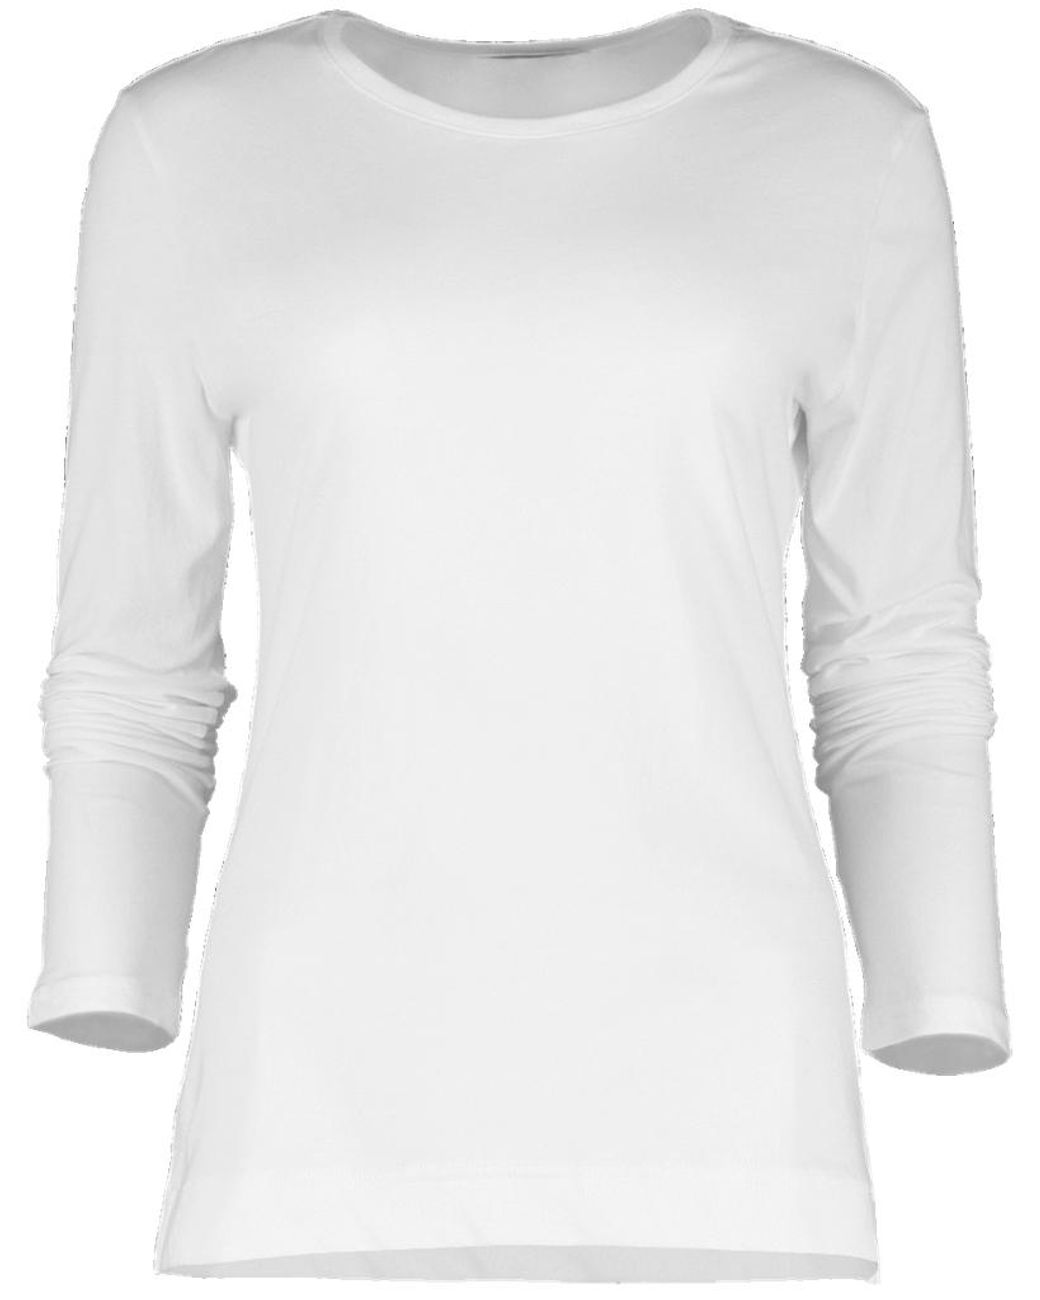 Adam Lippes Cotton Crewneck T-shirt in White - Lyst